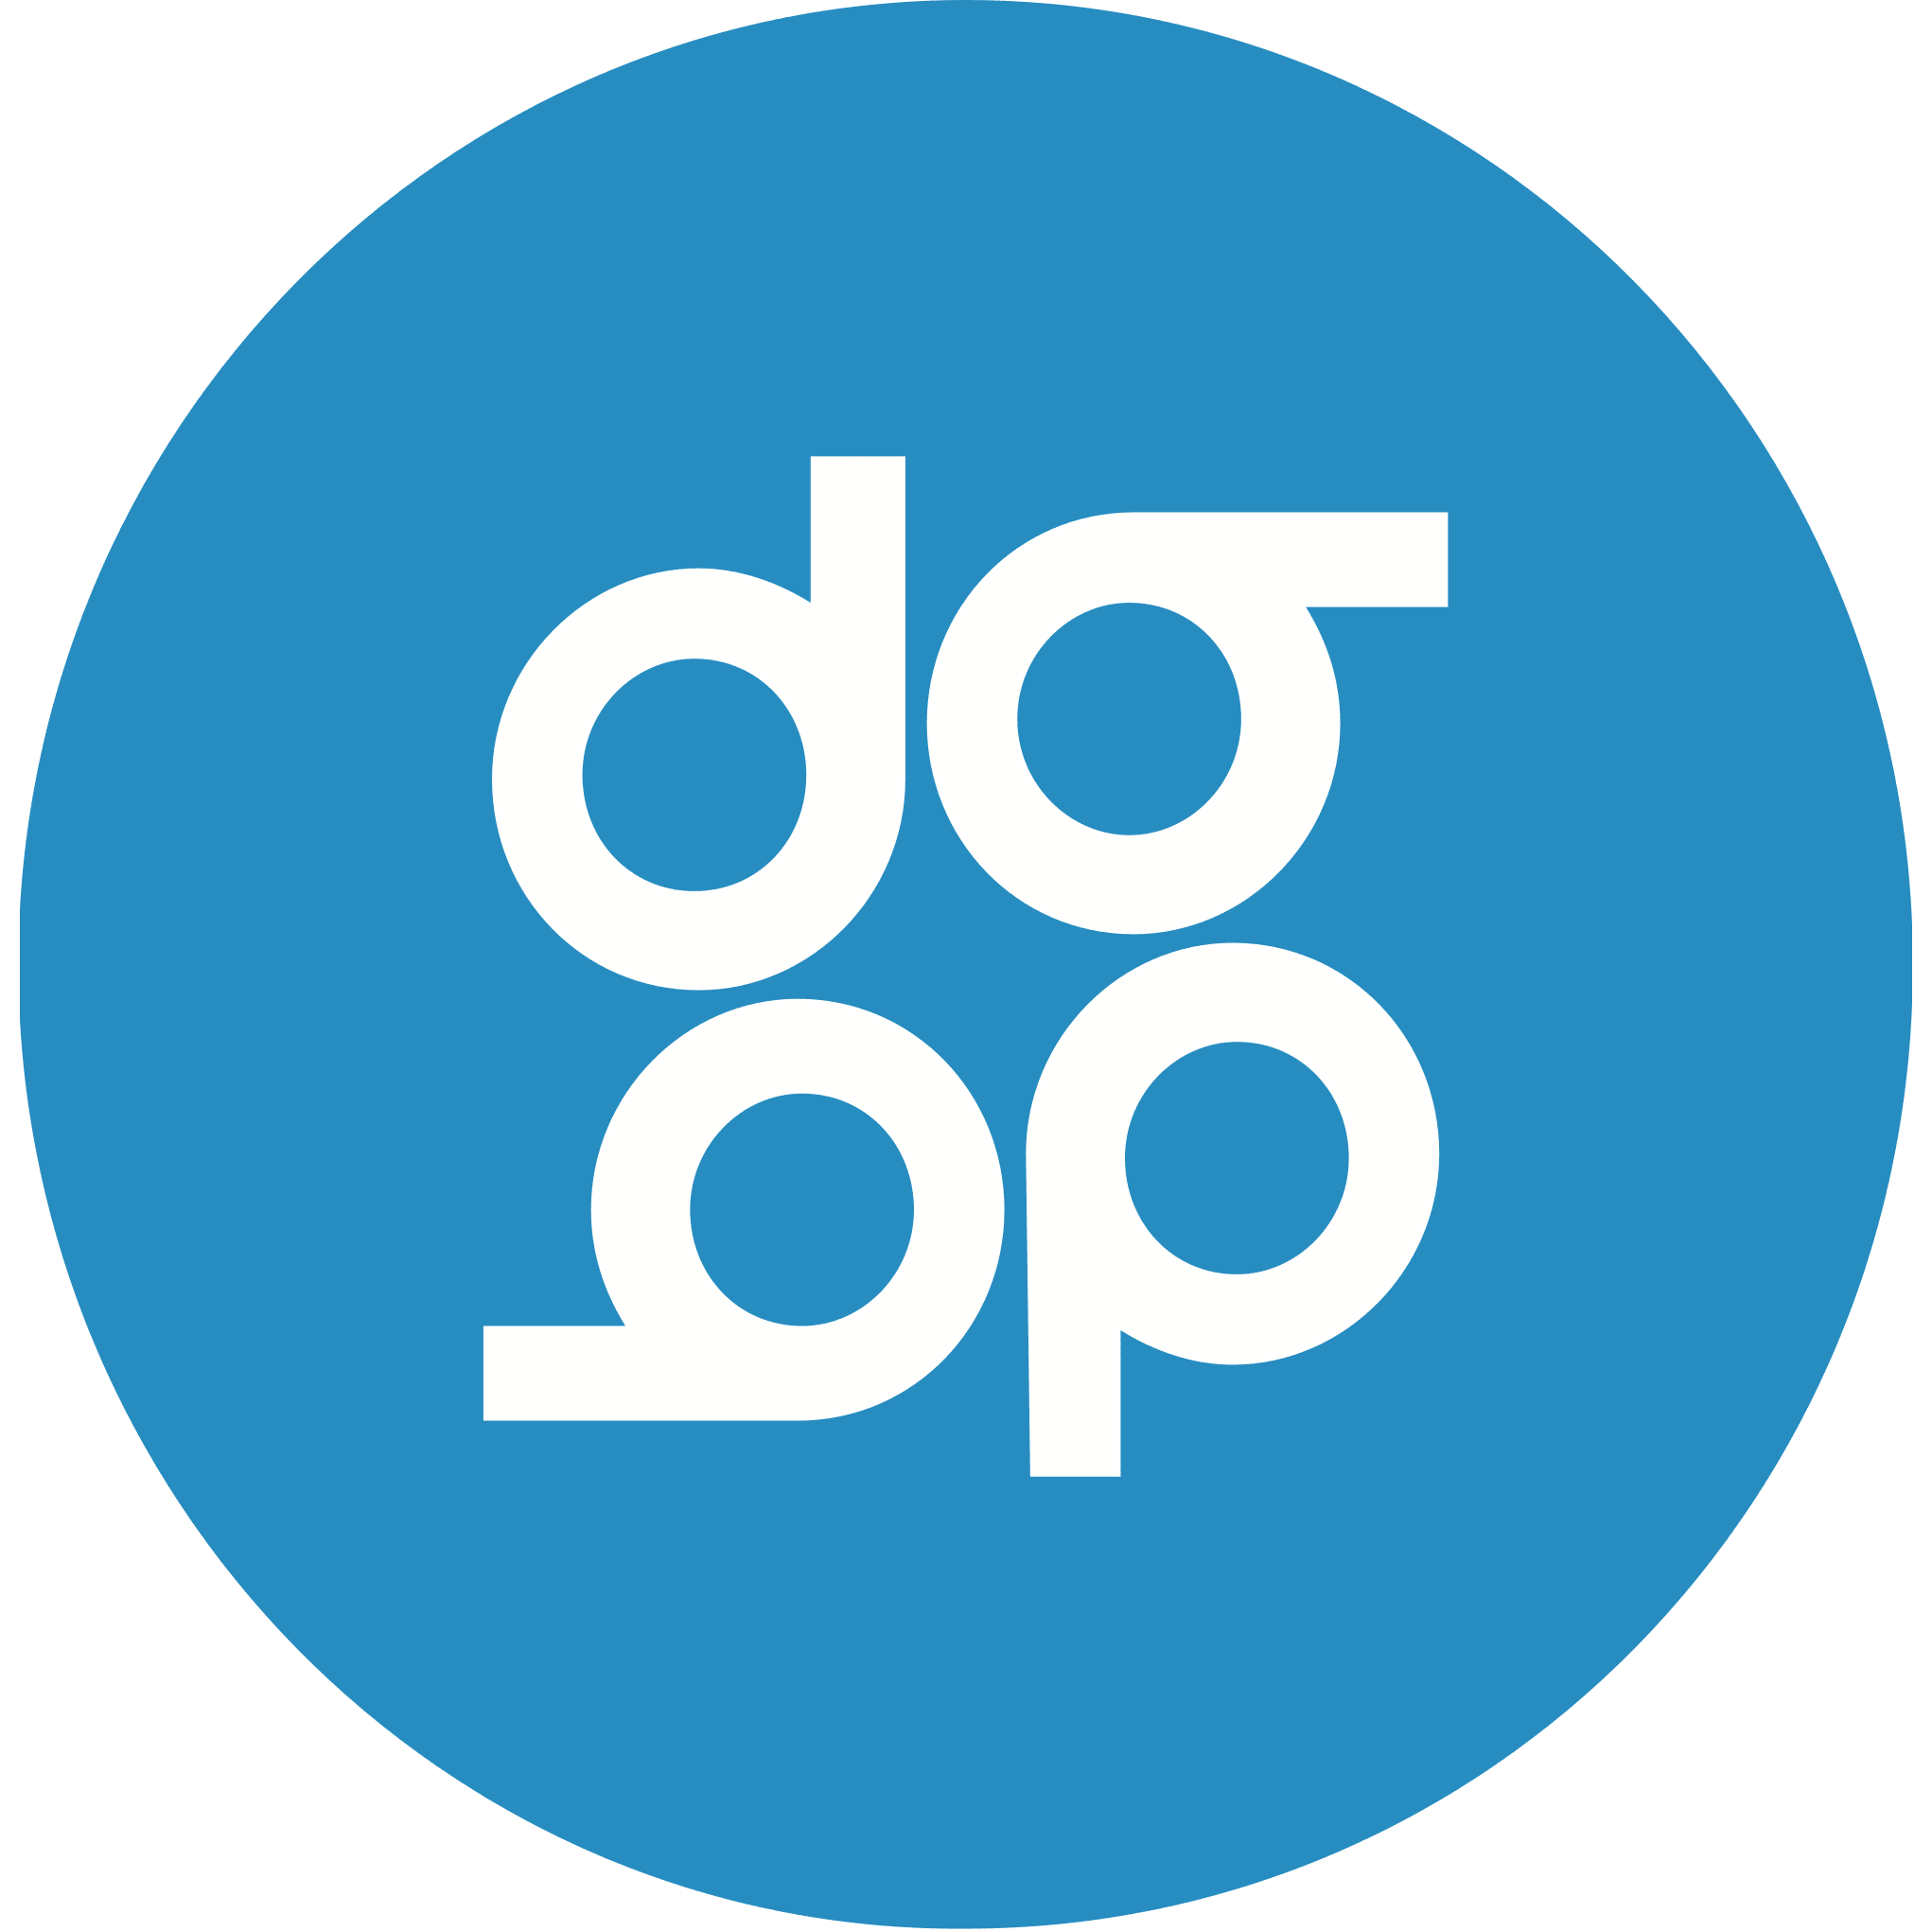 DigitalBits logo in png format